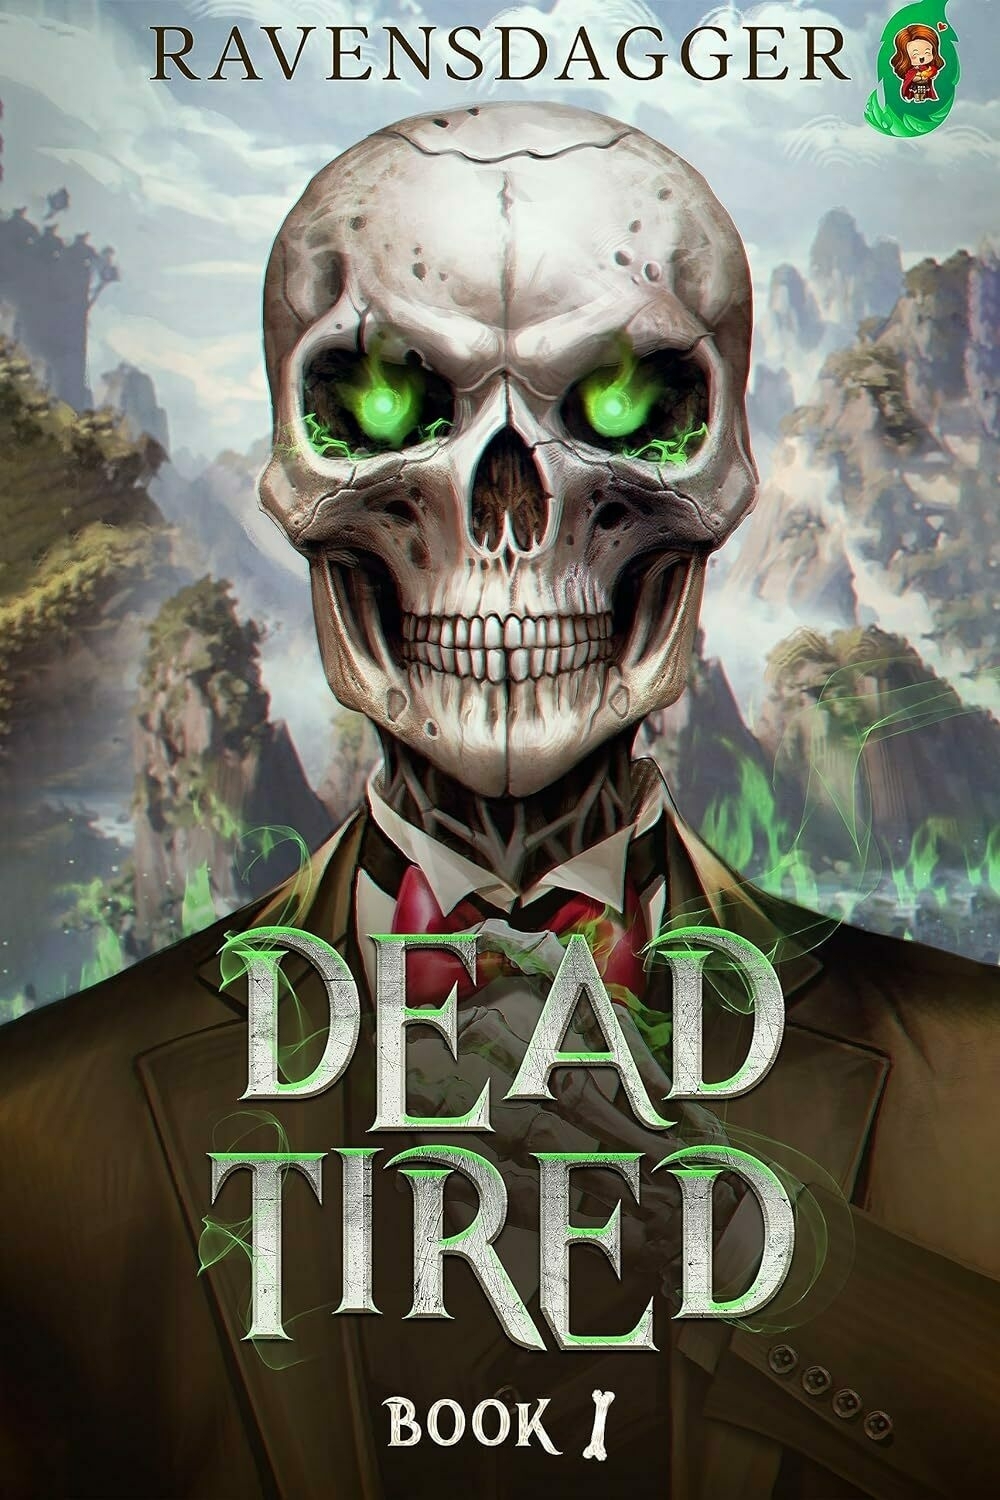 Cover art for Dead Tired